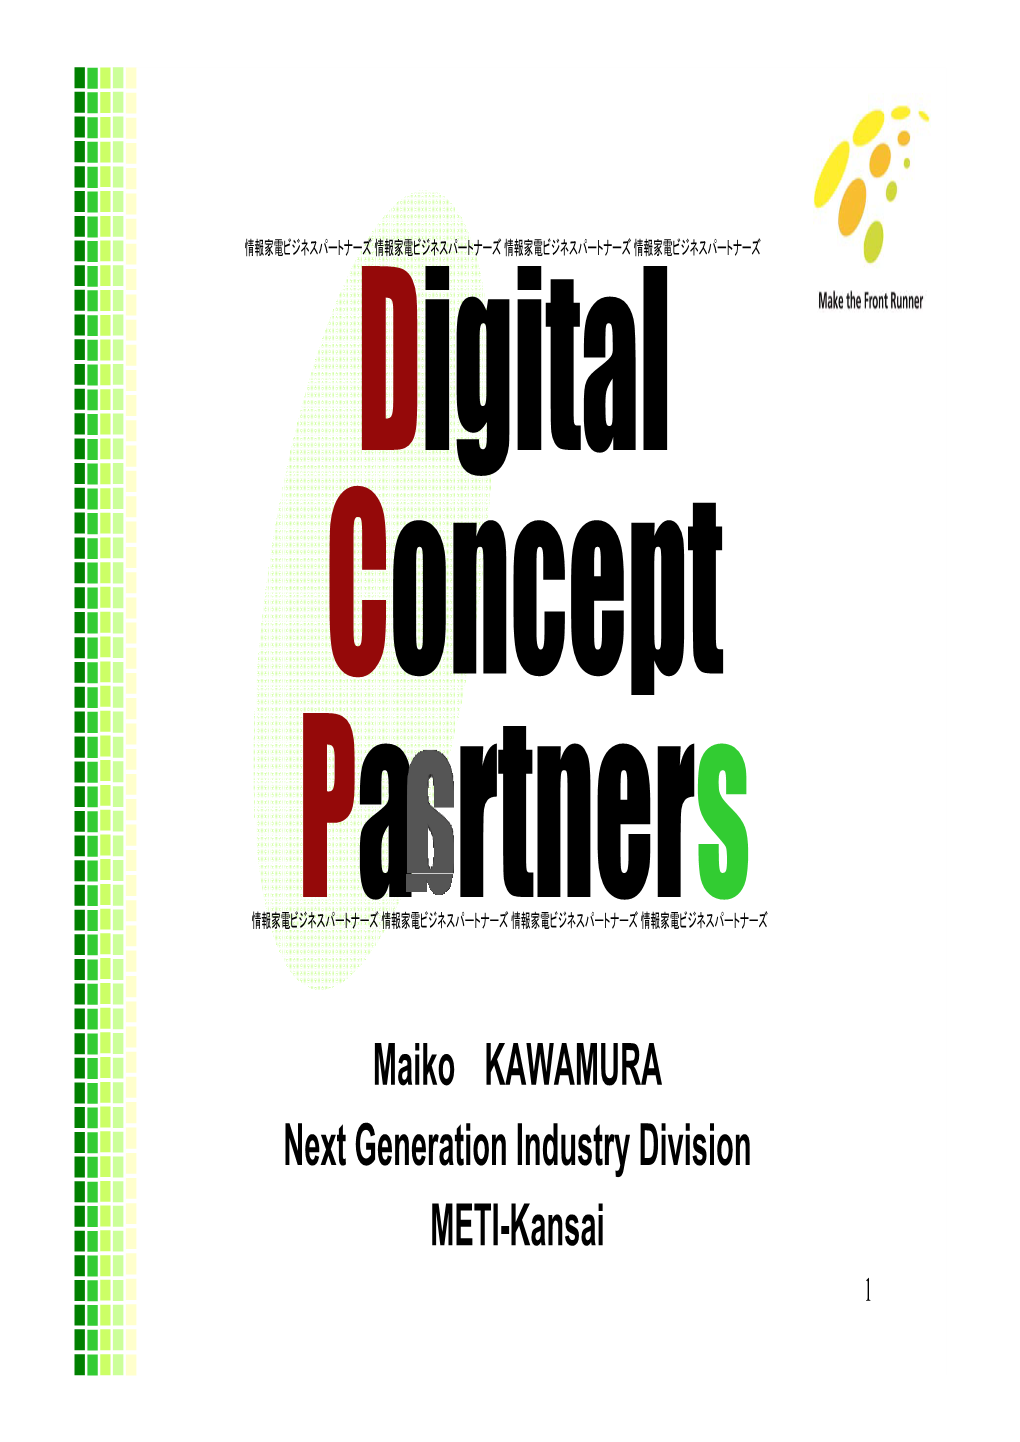 Maiko KAWAMURA Next Generation Industry Division METI-Kansai